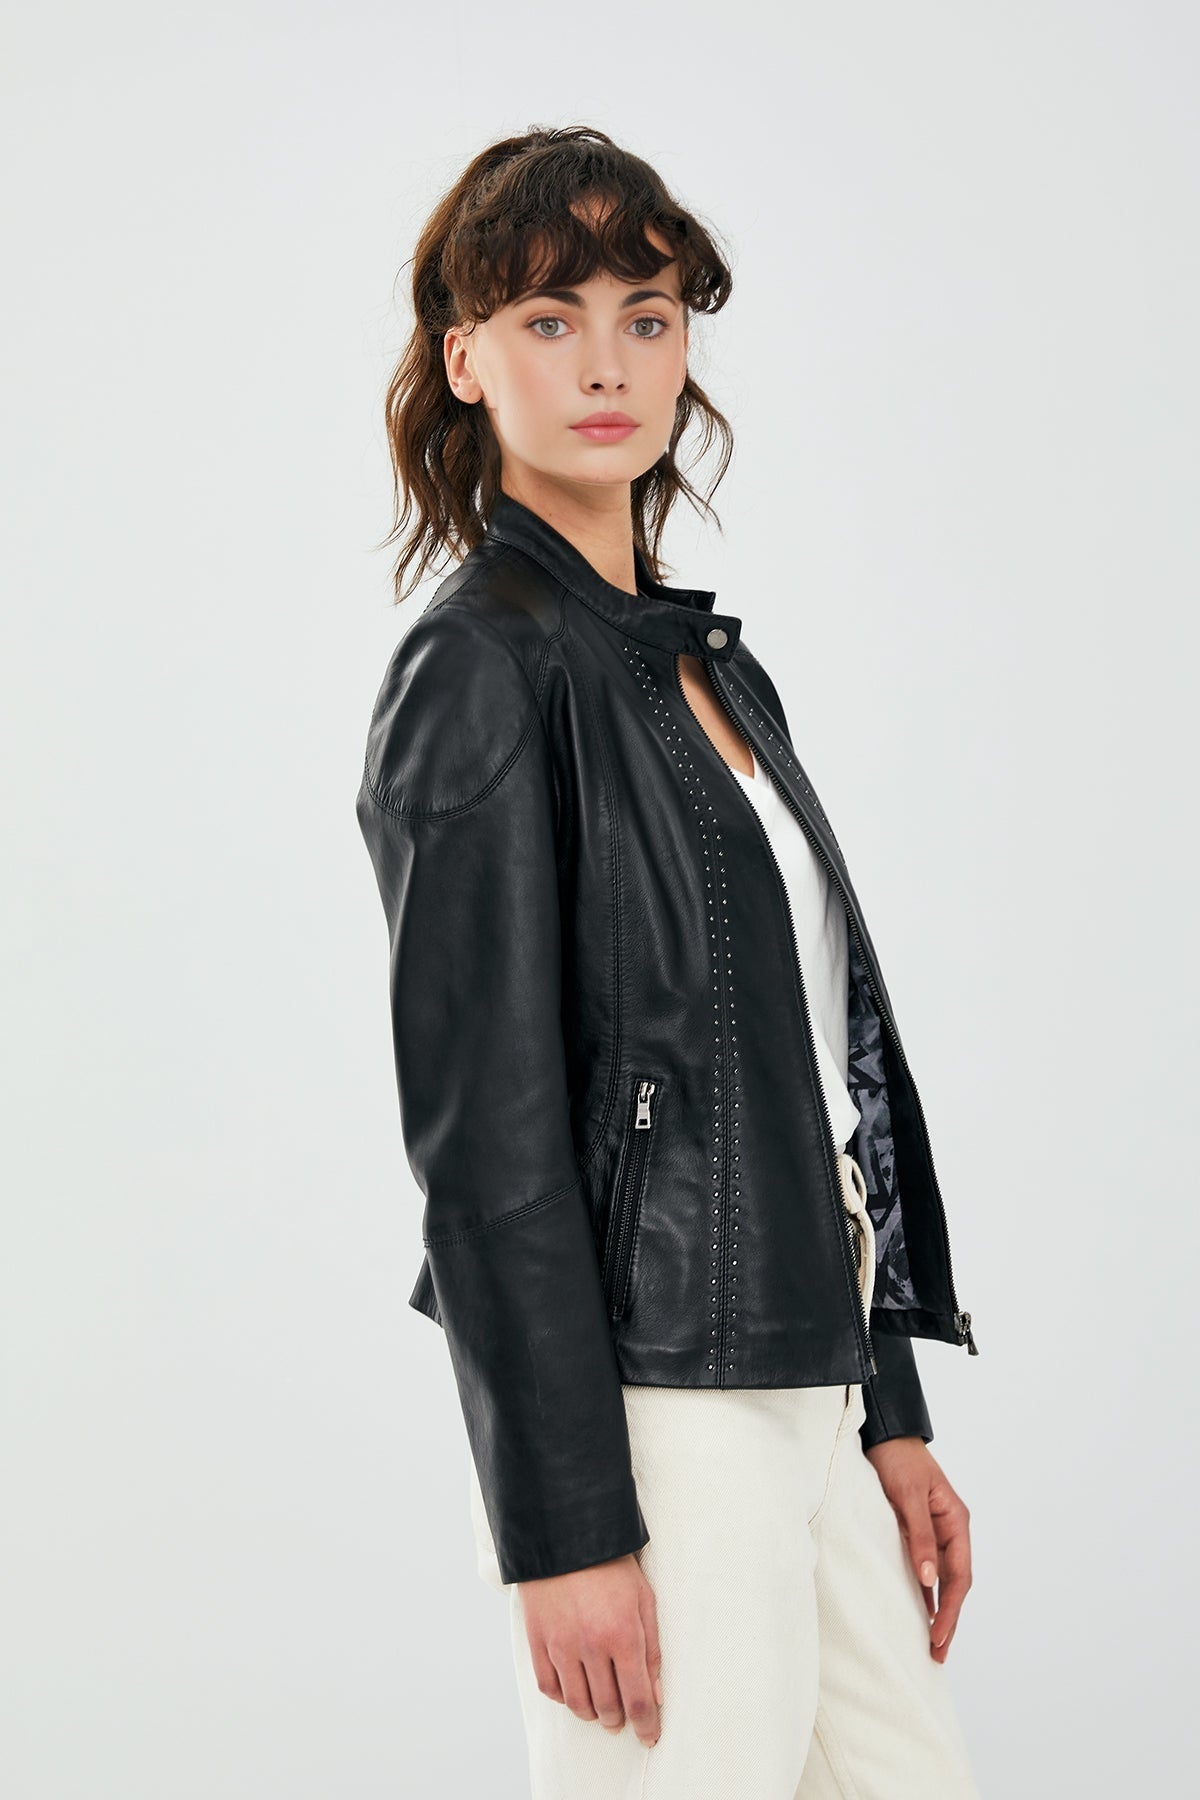 Lizzy Black Leather Jacket